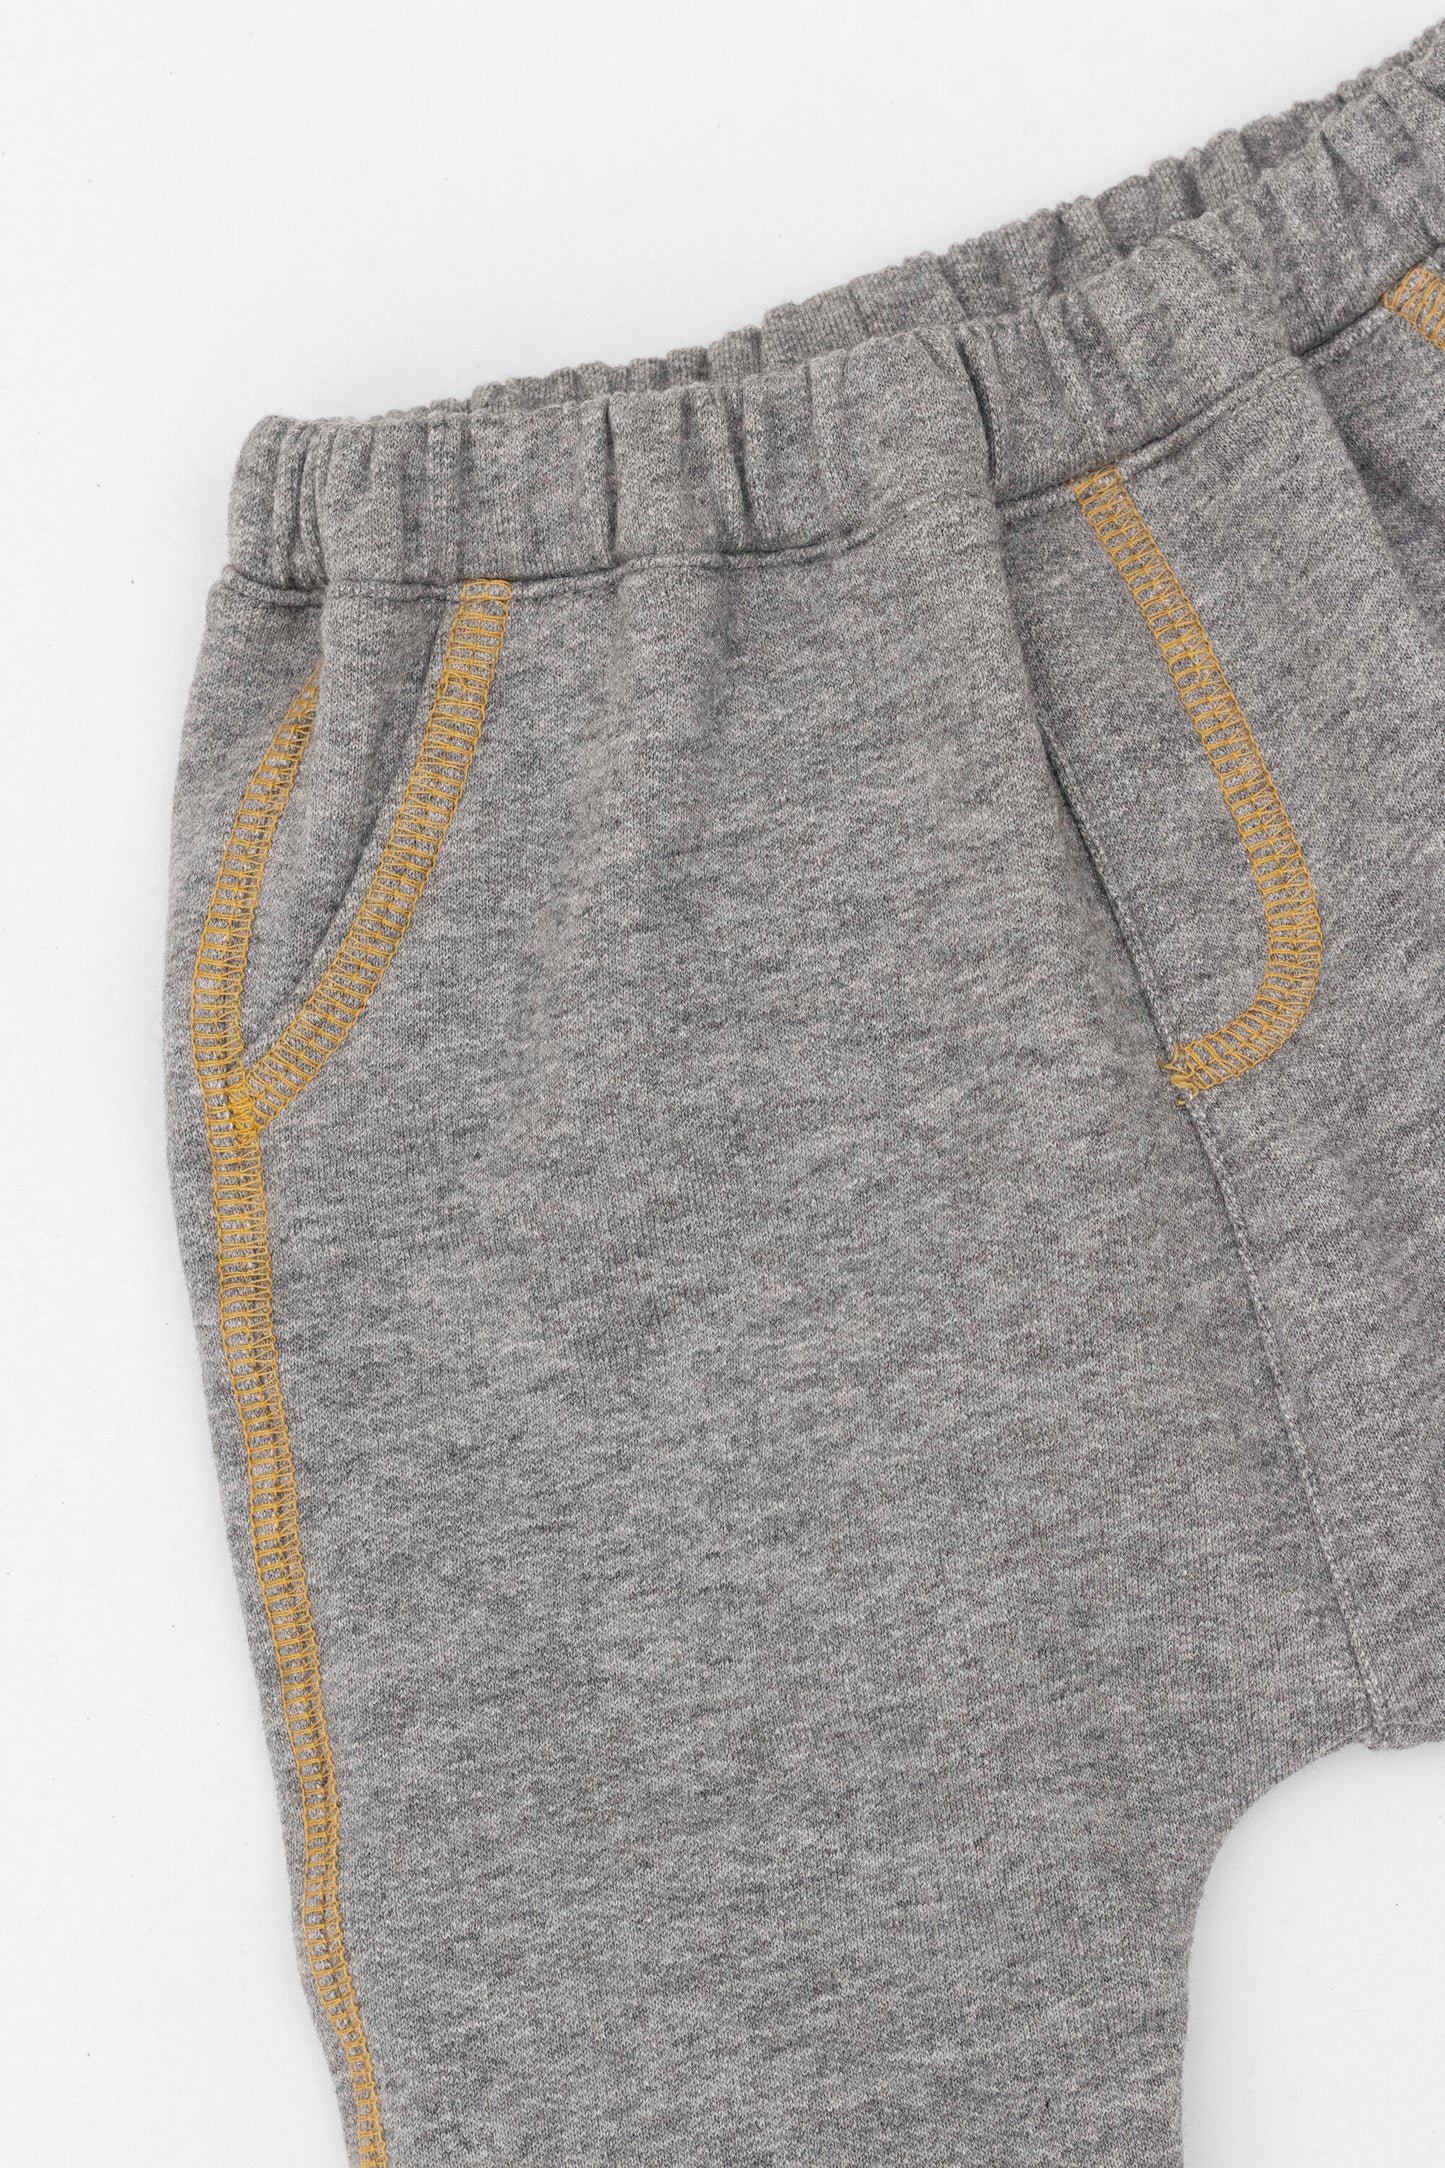 Organic contrast stitching pull-on pants grey